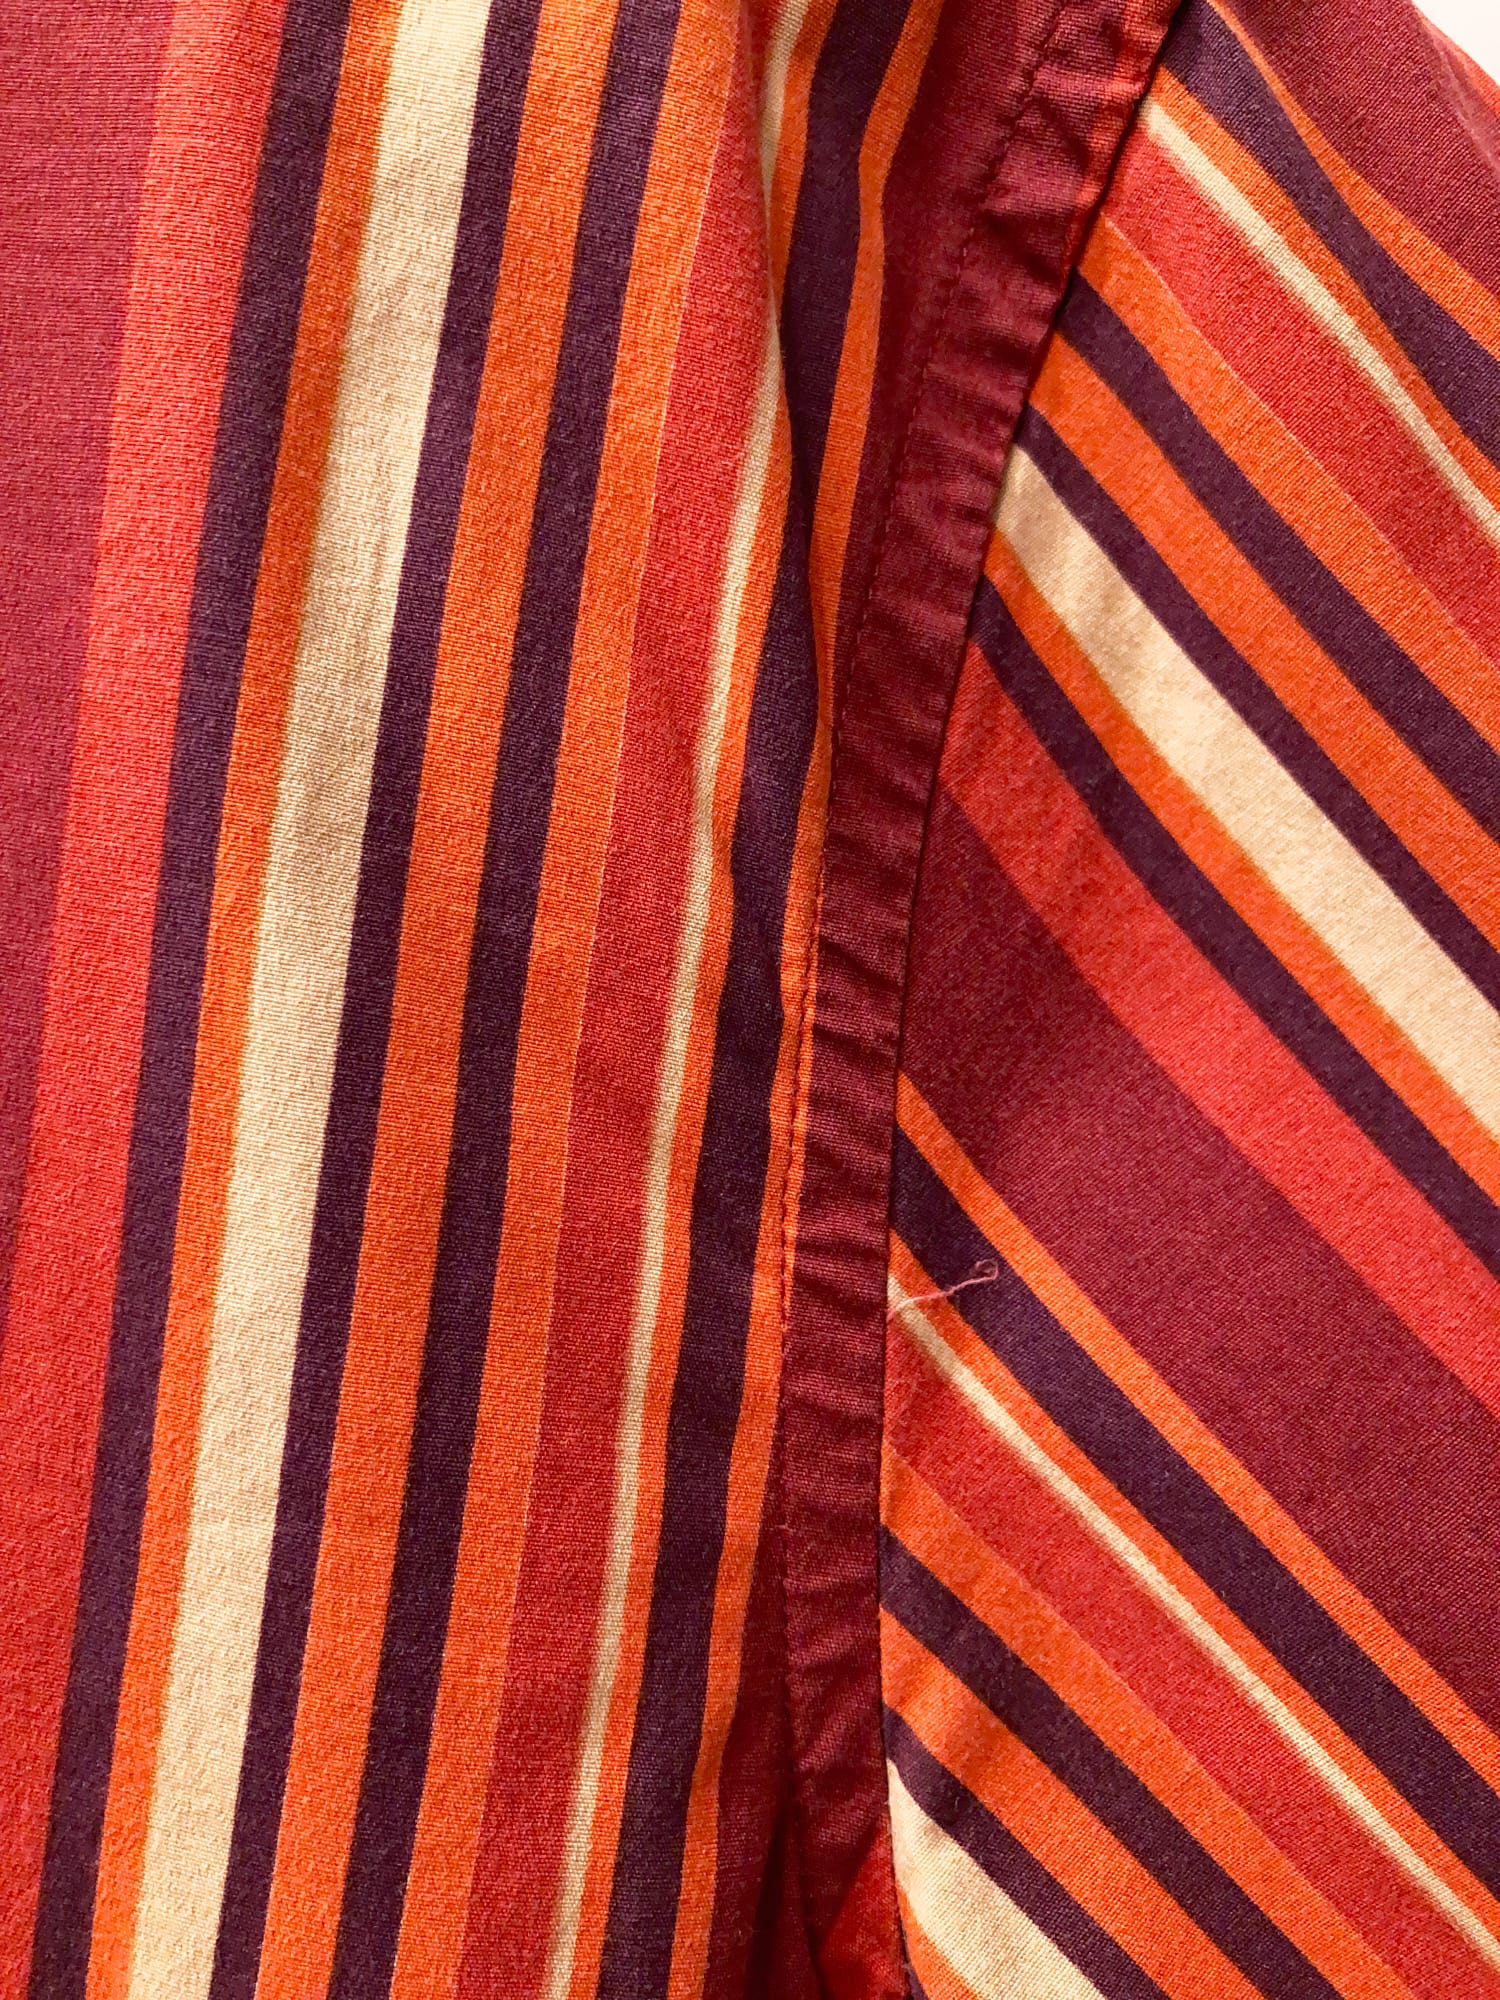 Dirk Bikkembergs red and orange cotton striped short sleeve shirt